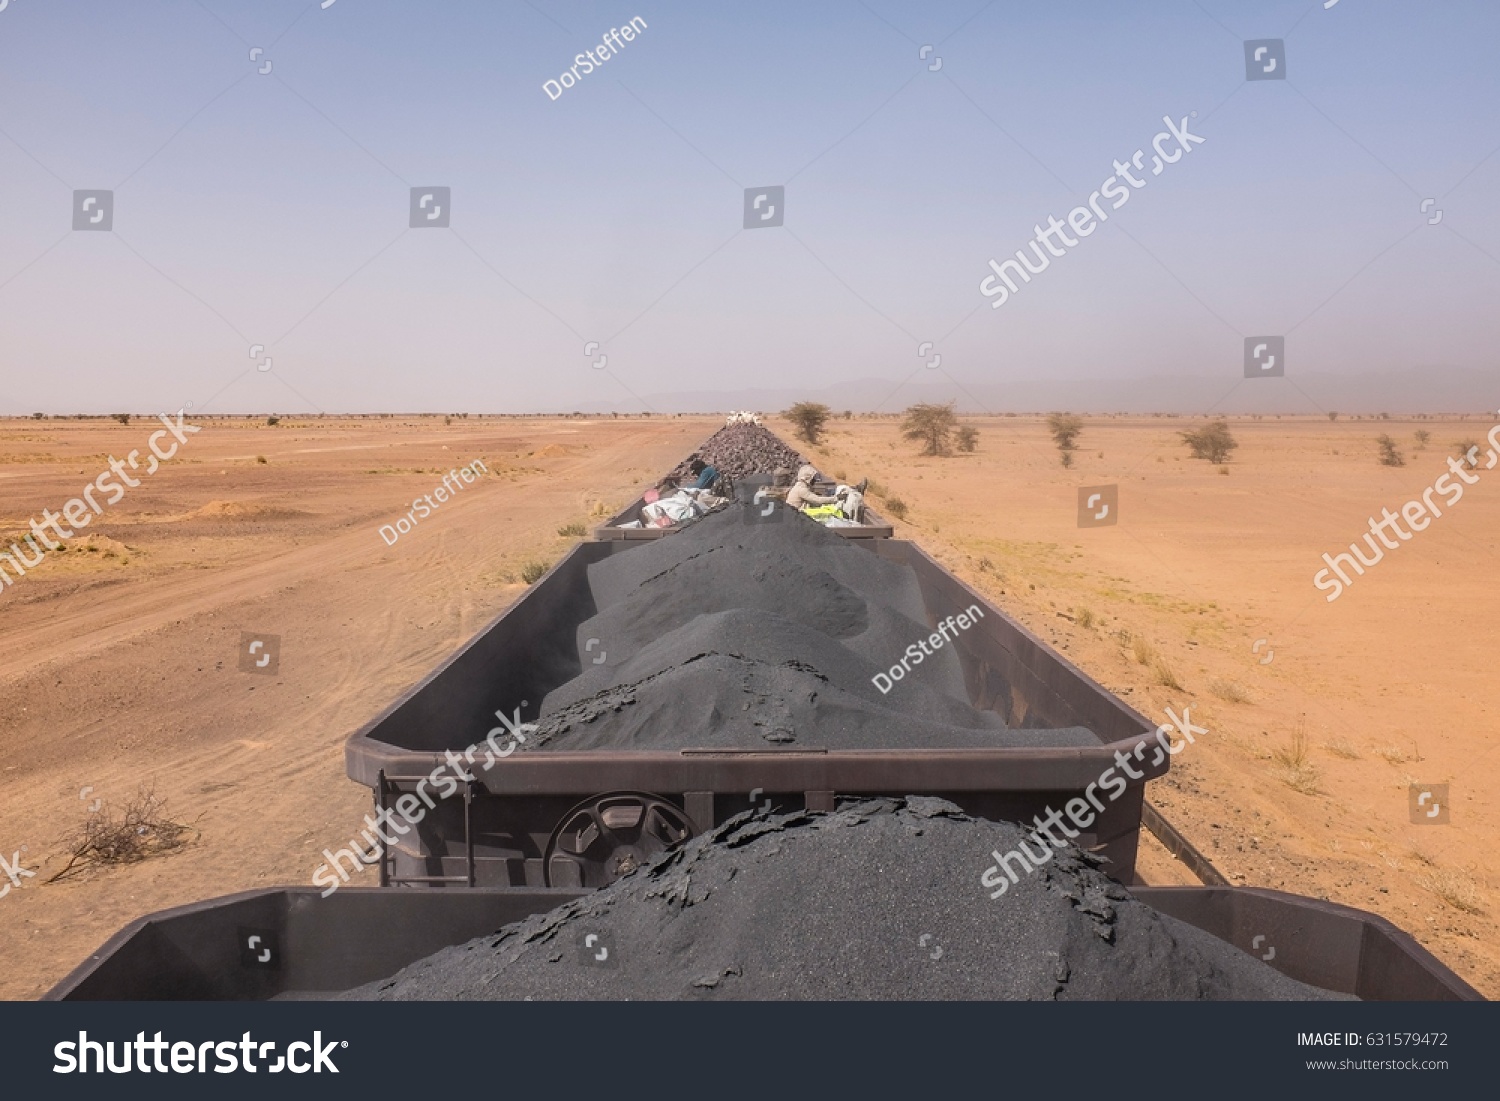 Mauritanian Iron Ore Train with Passengers #631579472